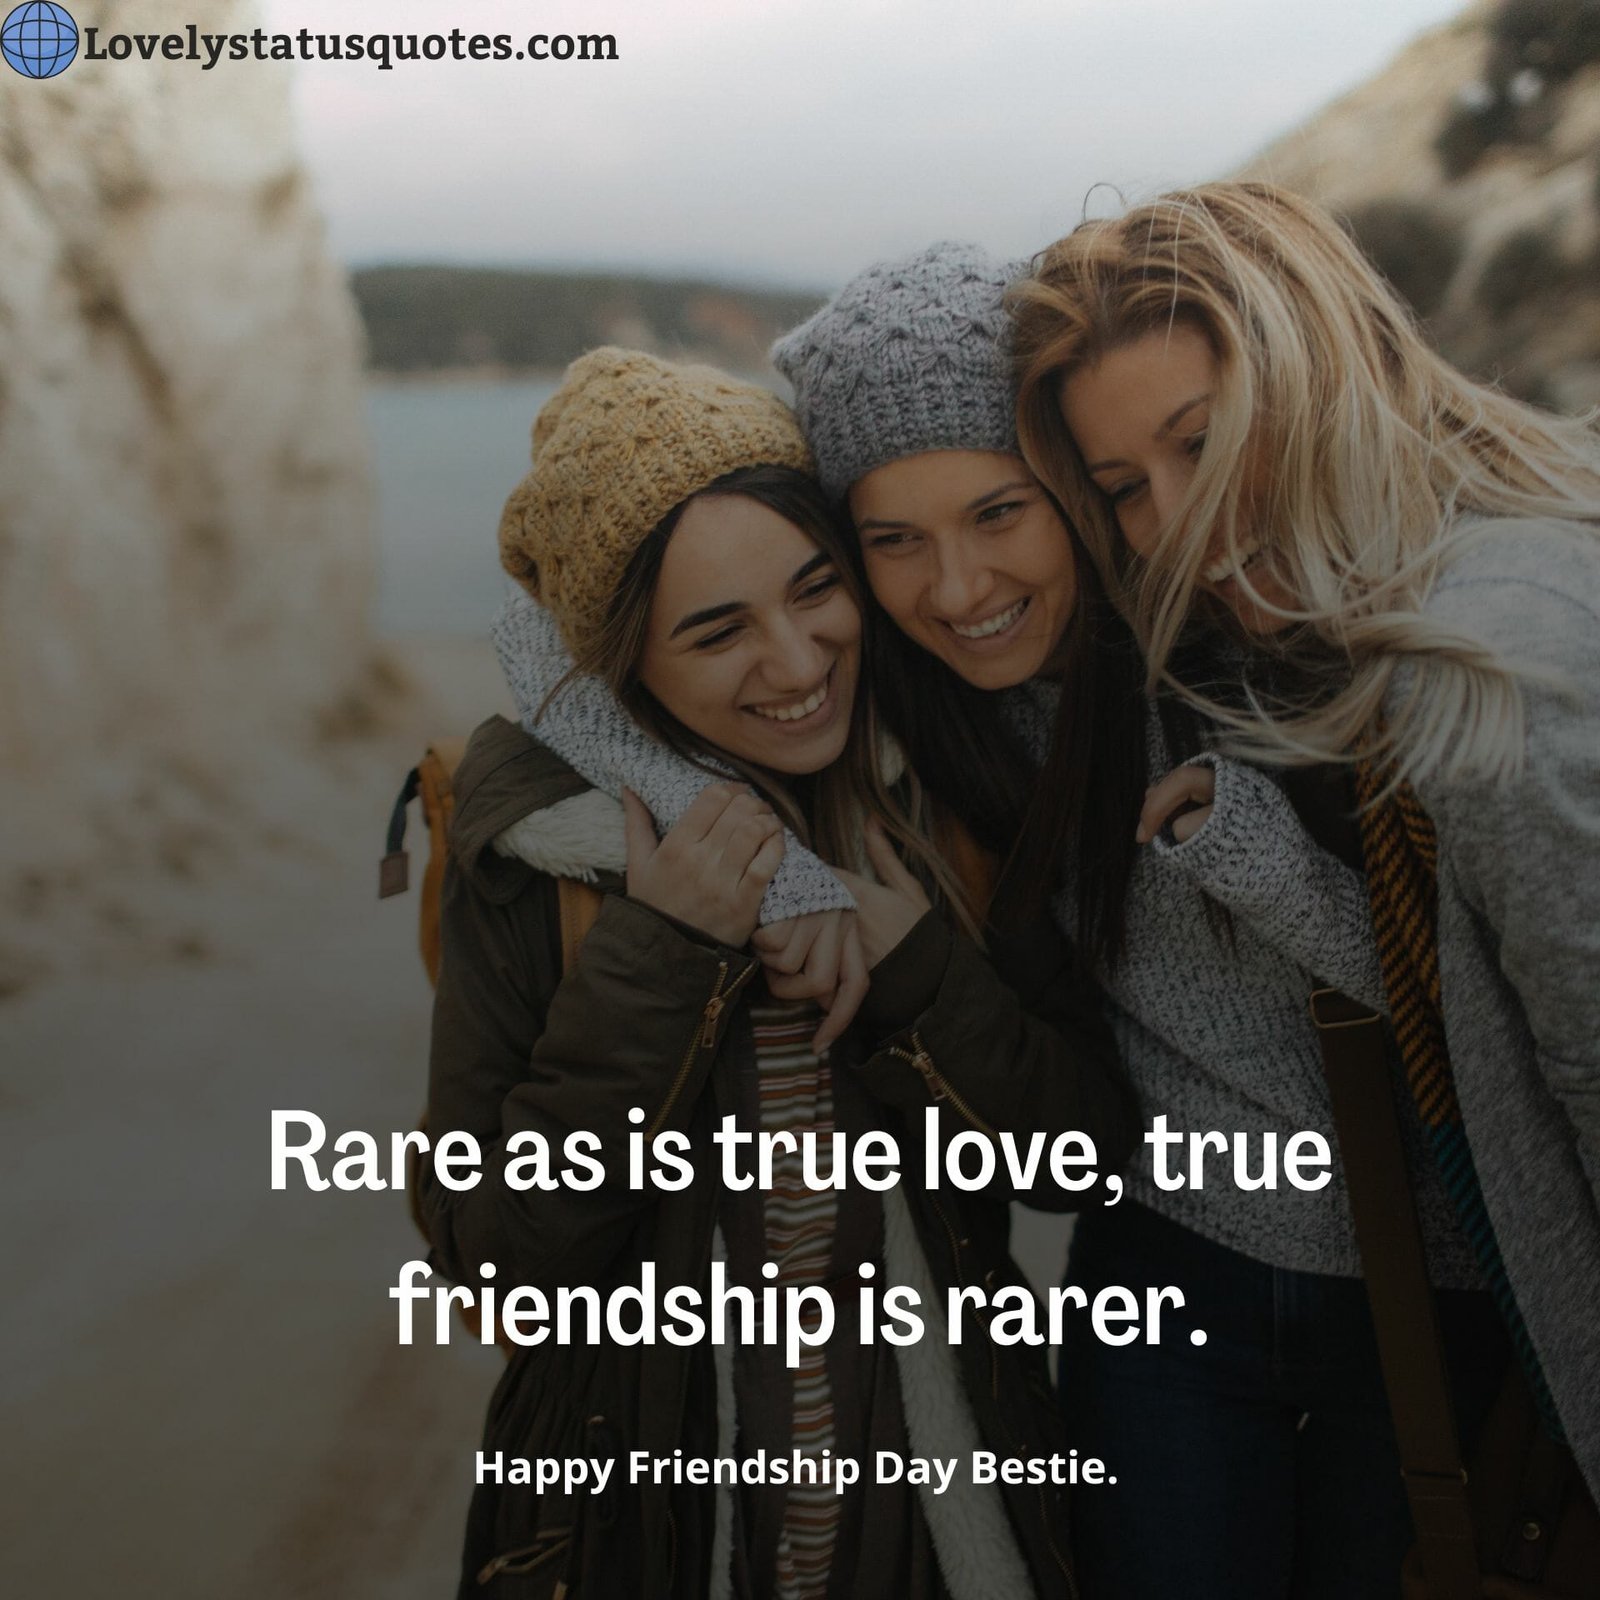 Rare as is true love, true friendship is rarer.Happy Friendship Day Bestie.